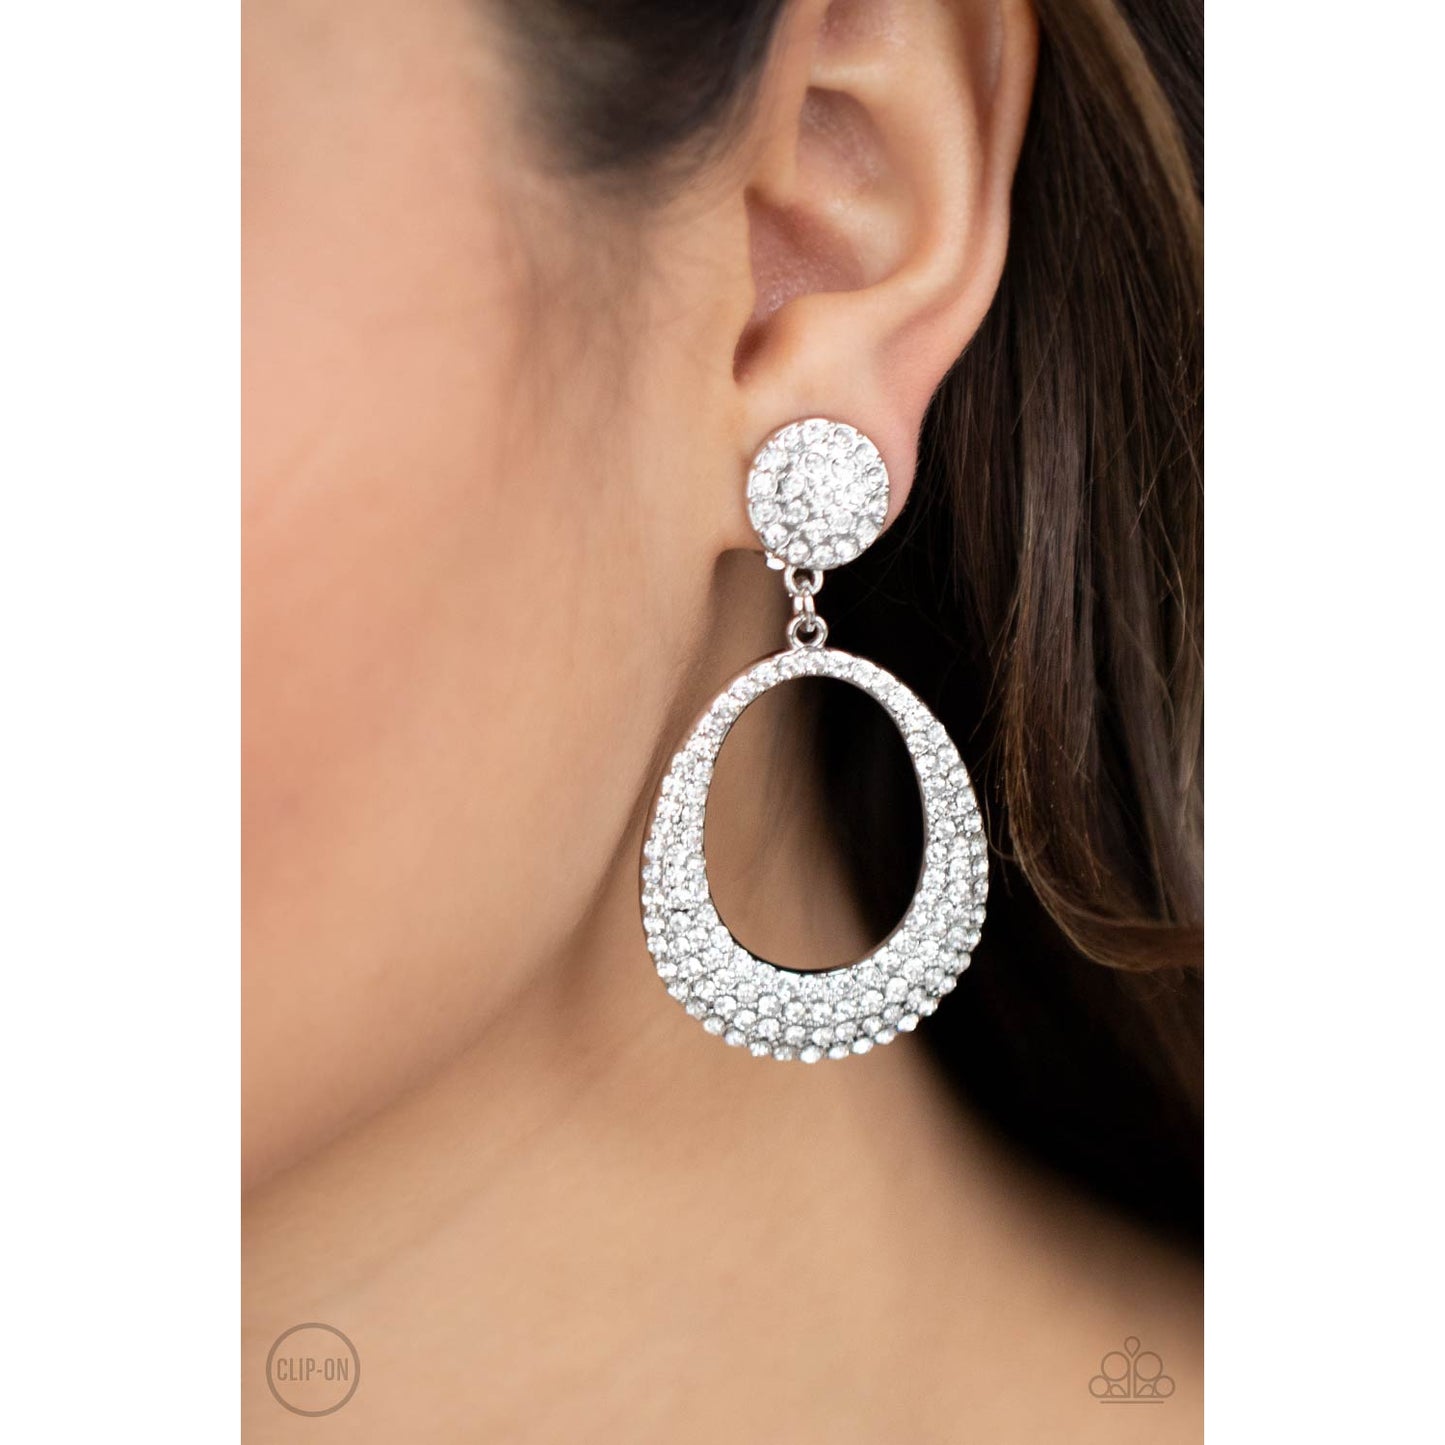 Sophisticated Smolder - White Rhinestone Earrings - Paparazzi Accessories - GlaMarous Titi Jewels